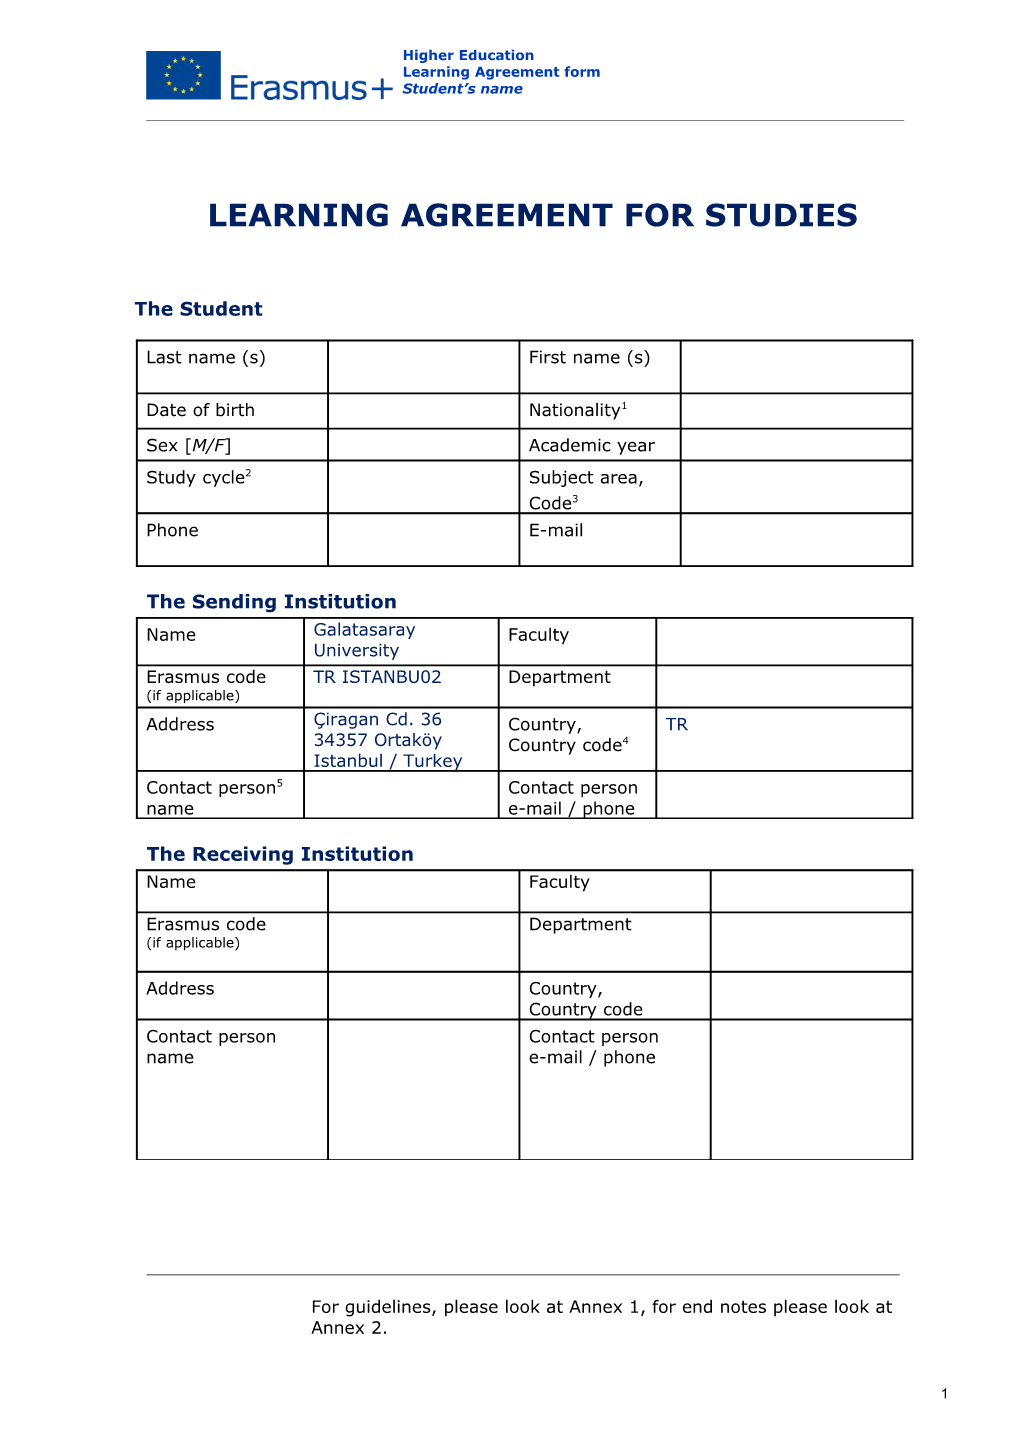 Learning Agreement for Studies s4